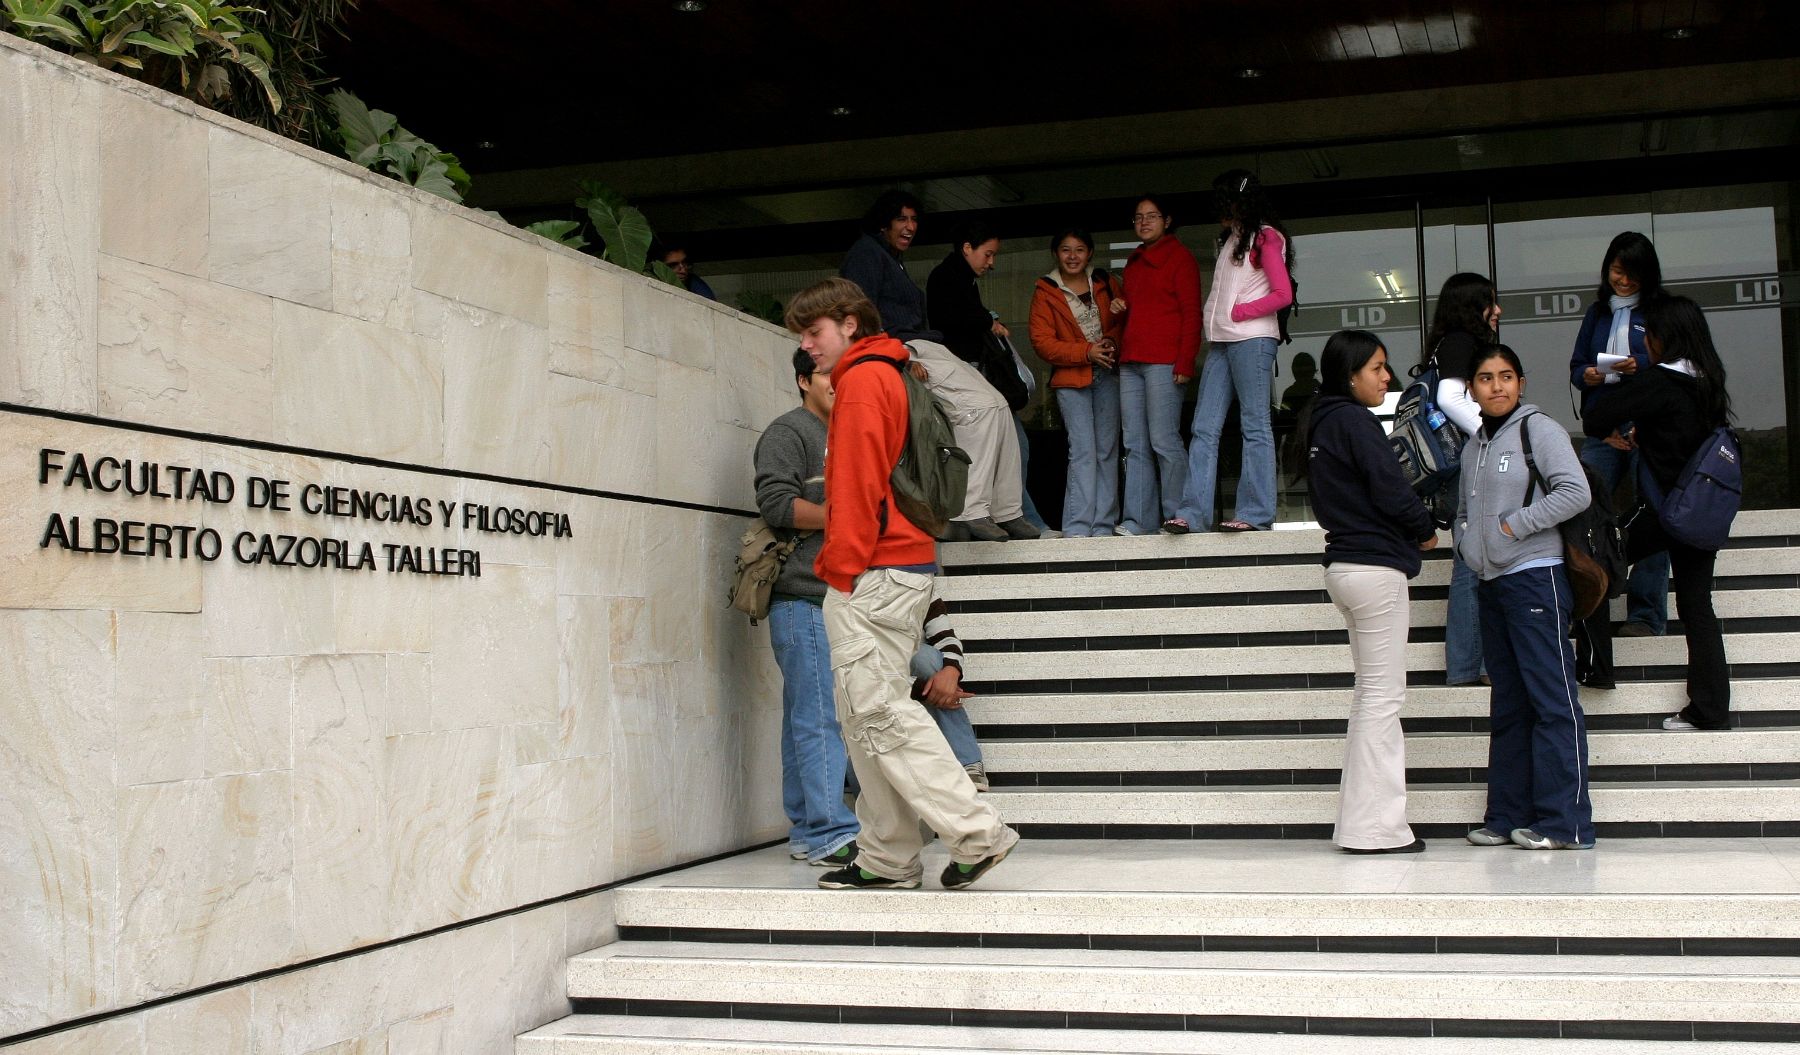 Universidad Cayetano Heredia